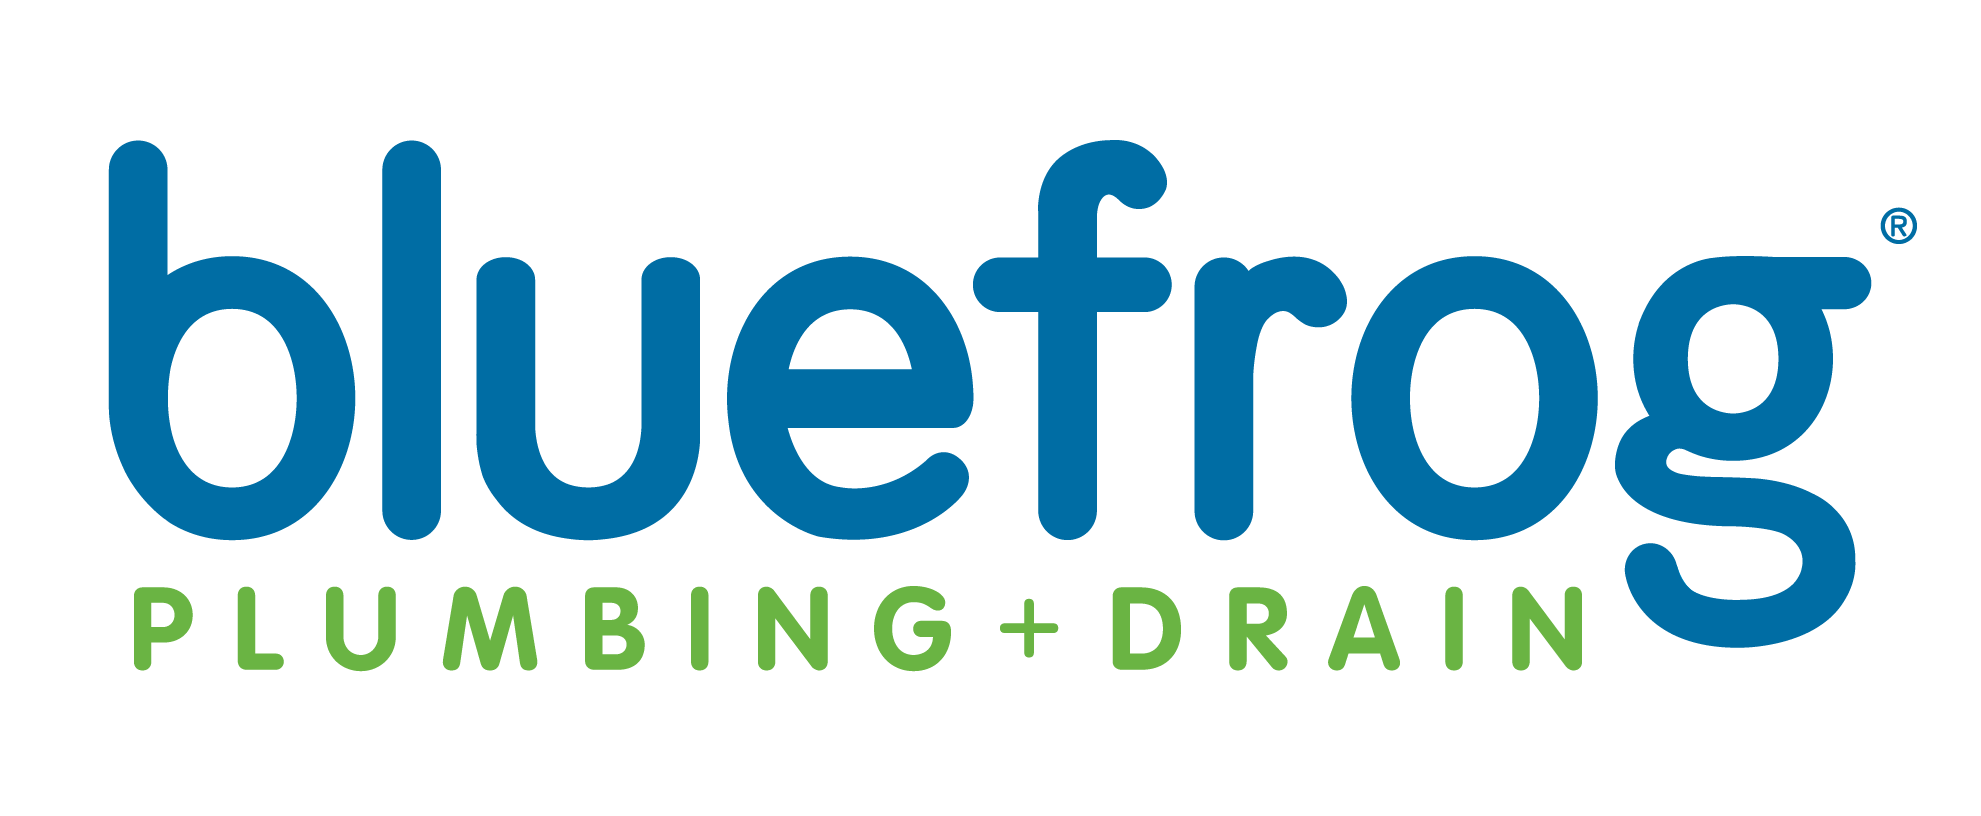 blueFrog Plumbing + Drain of North Dallas Logo